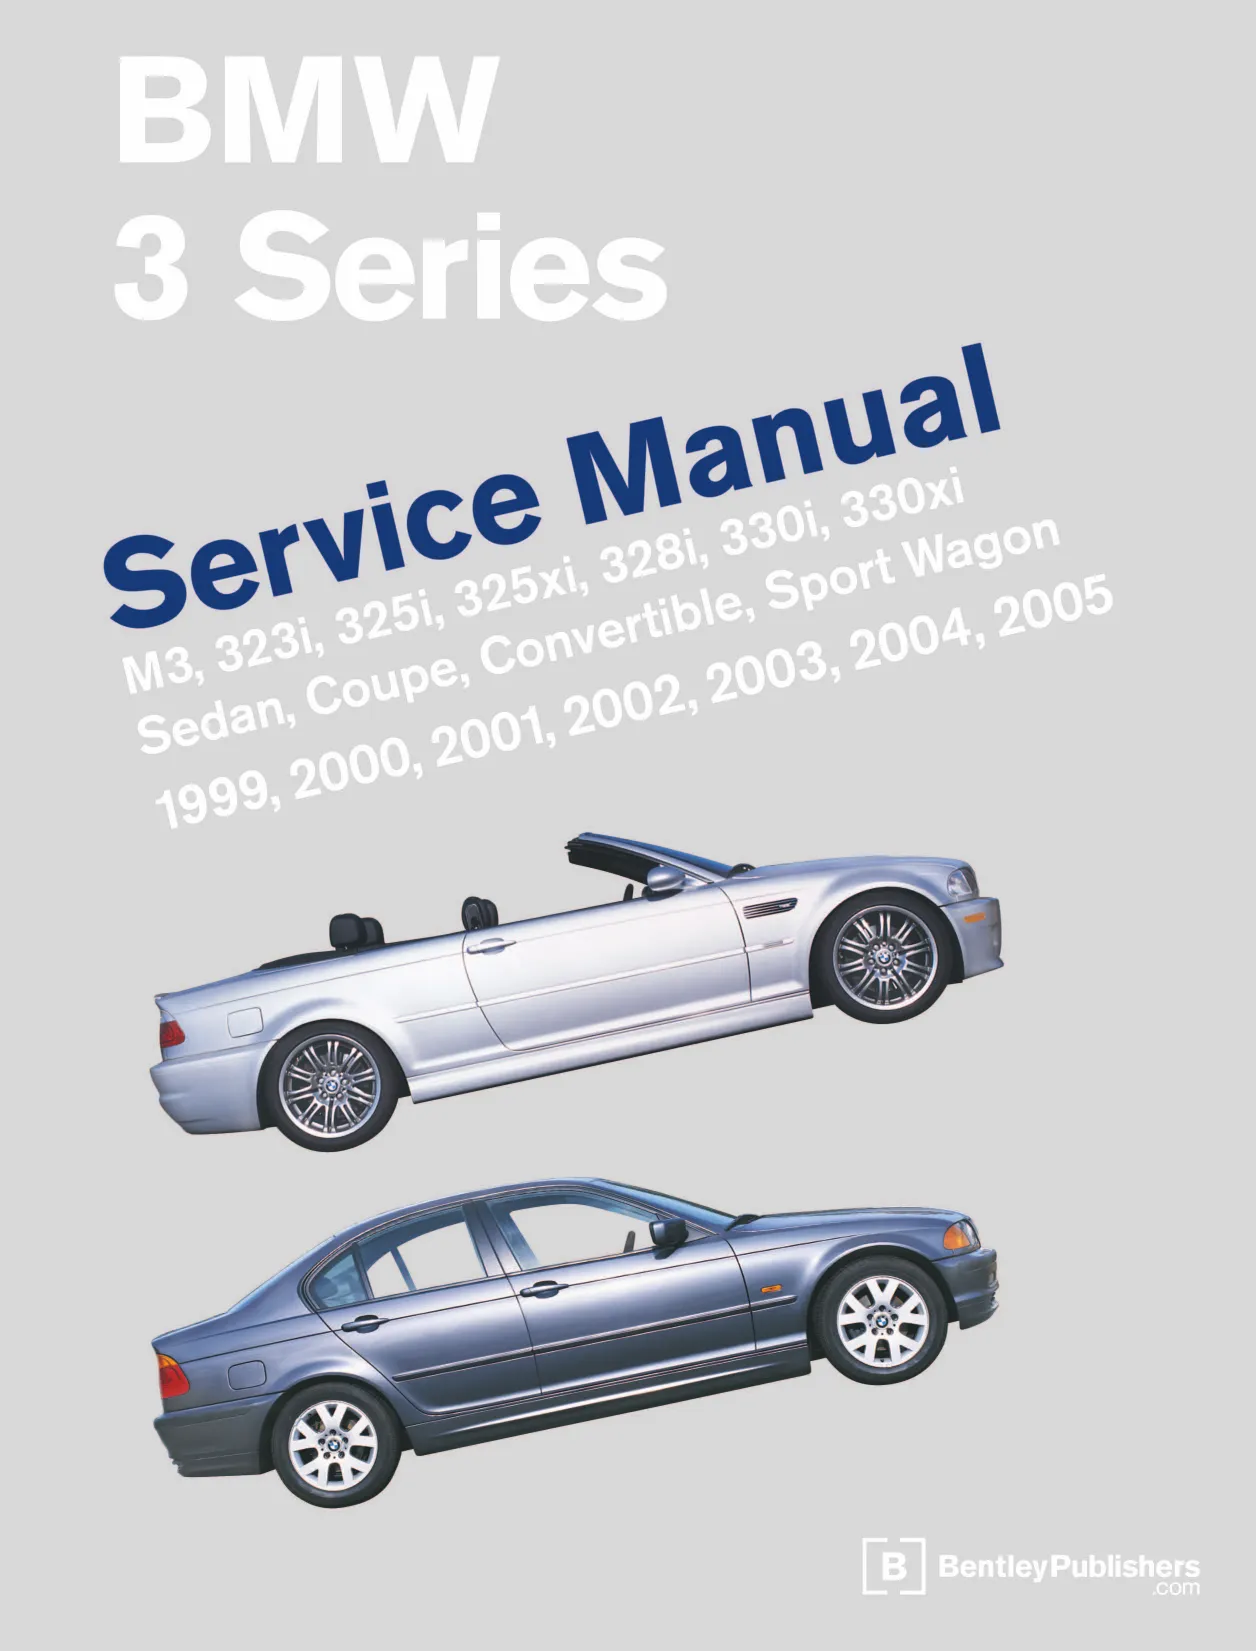 1999-2005 BMW E46 323i, 325i, 325xi, 328i, 330i, 330xi service manual Preview image 1